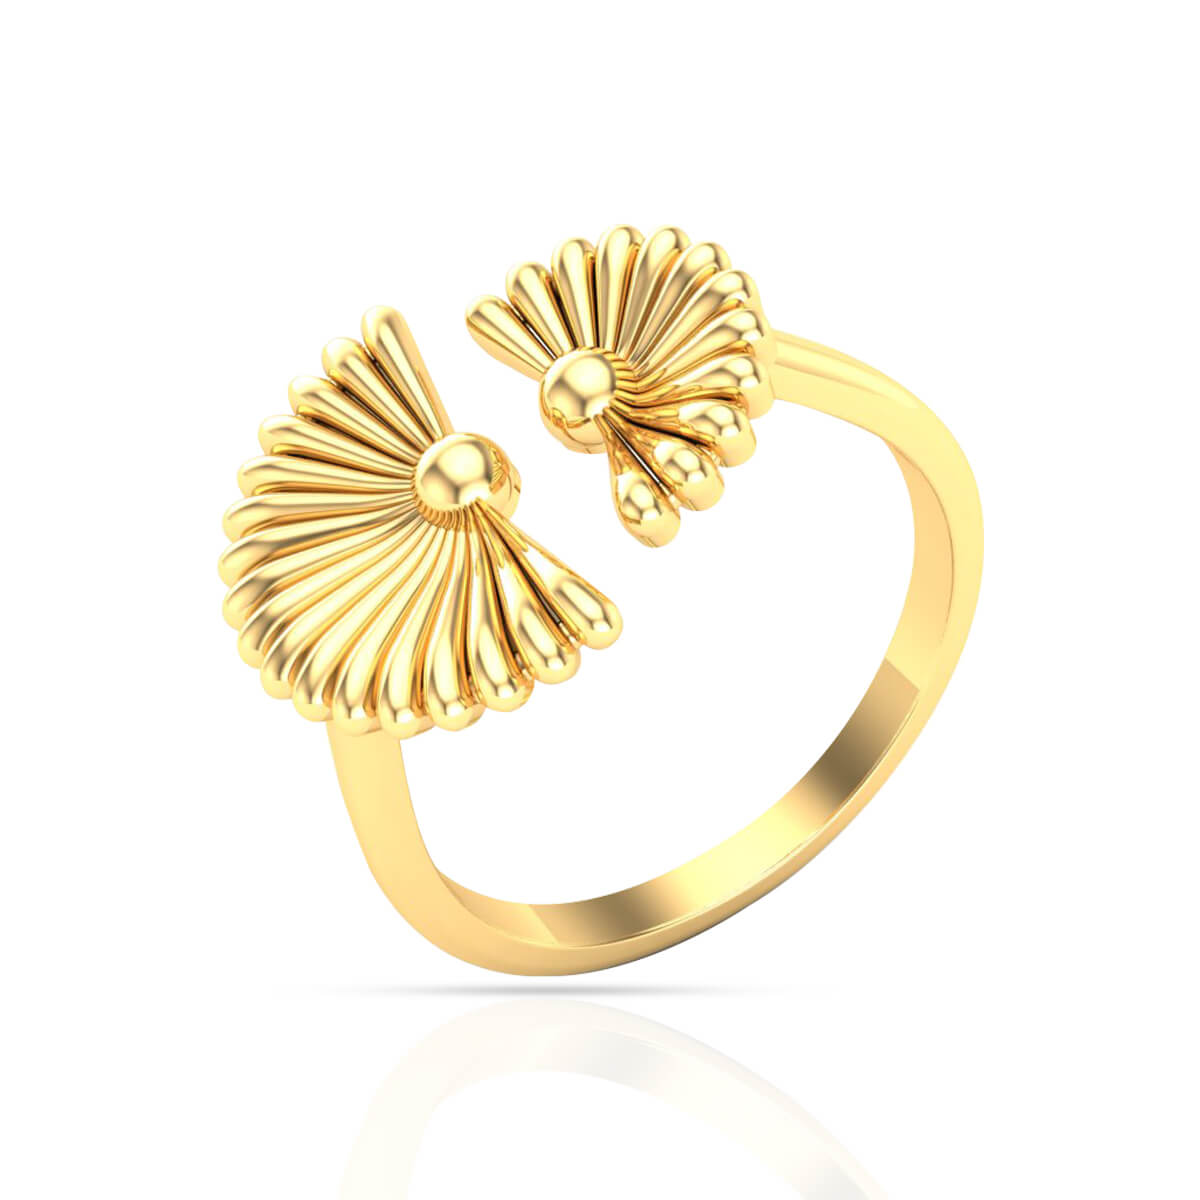 7 Simple ring design ideas  ring designs, gold ring designs